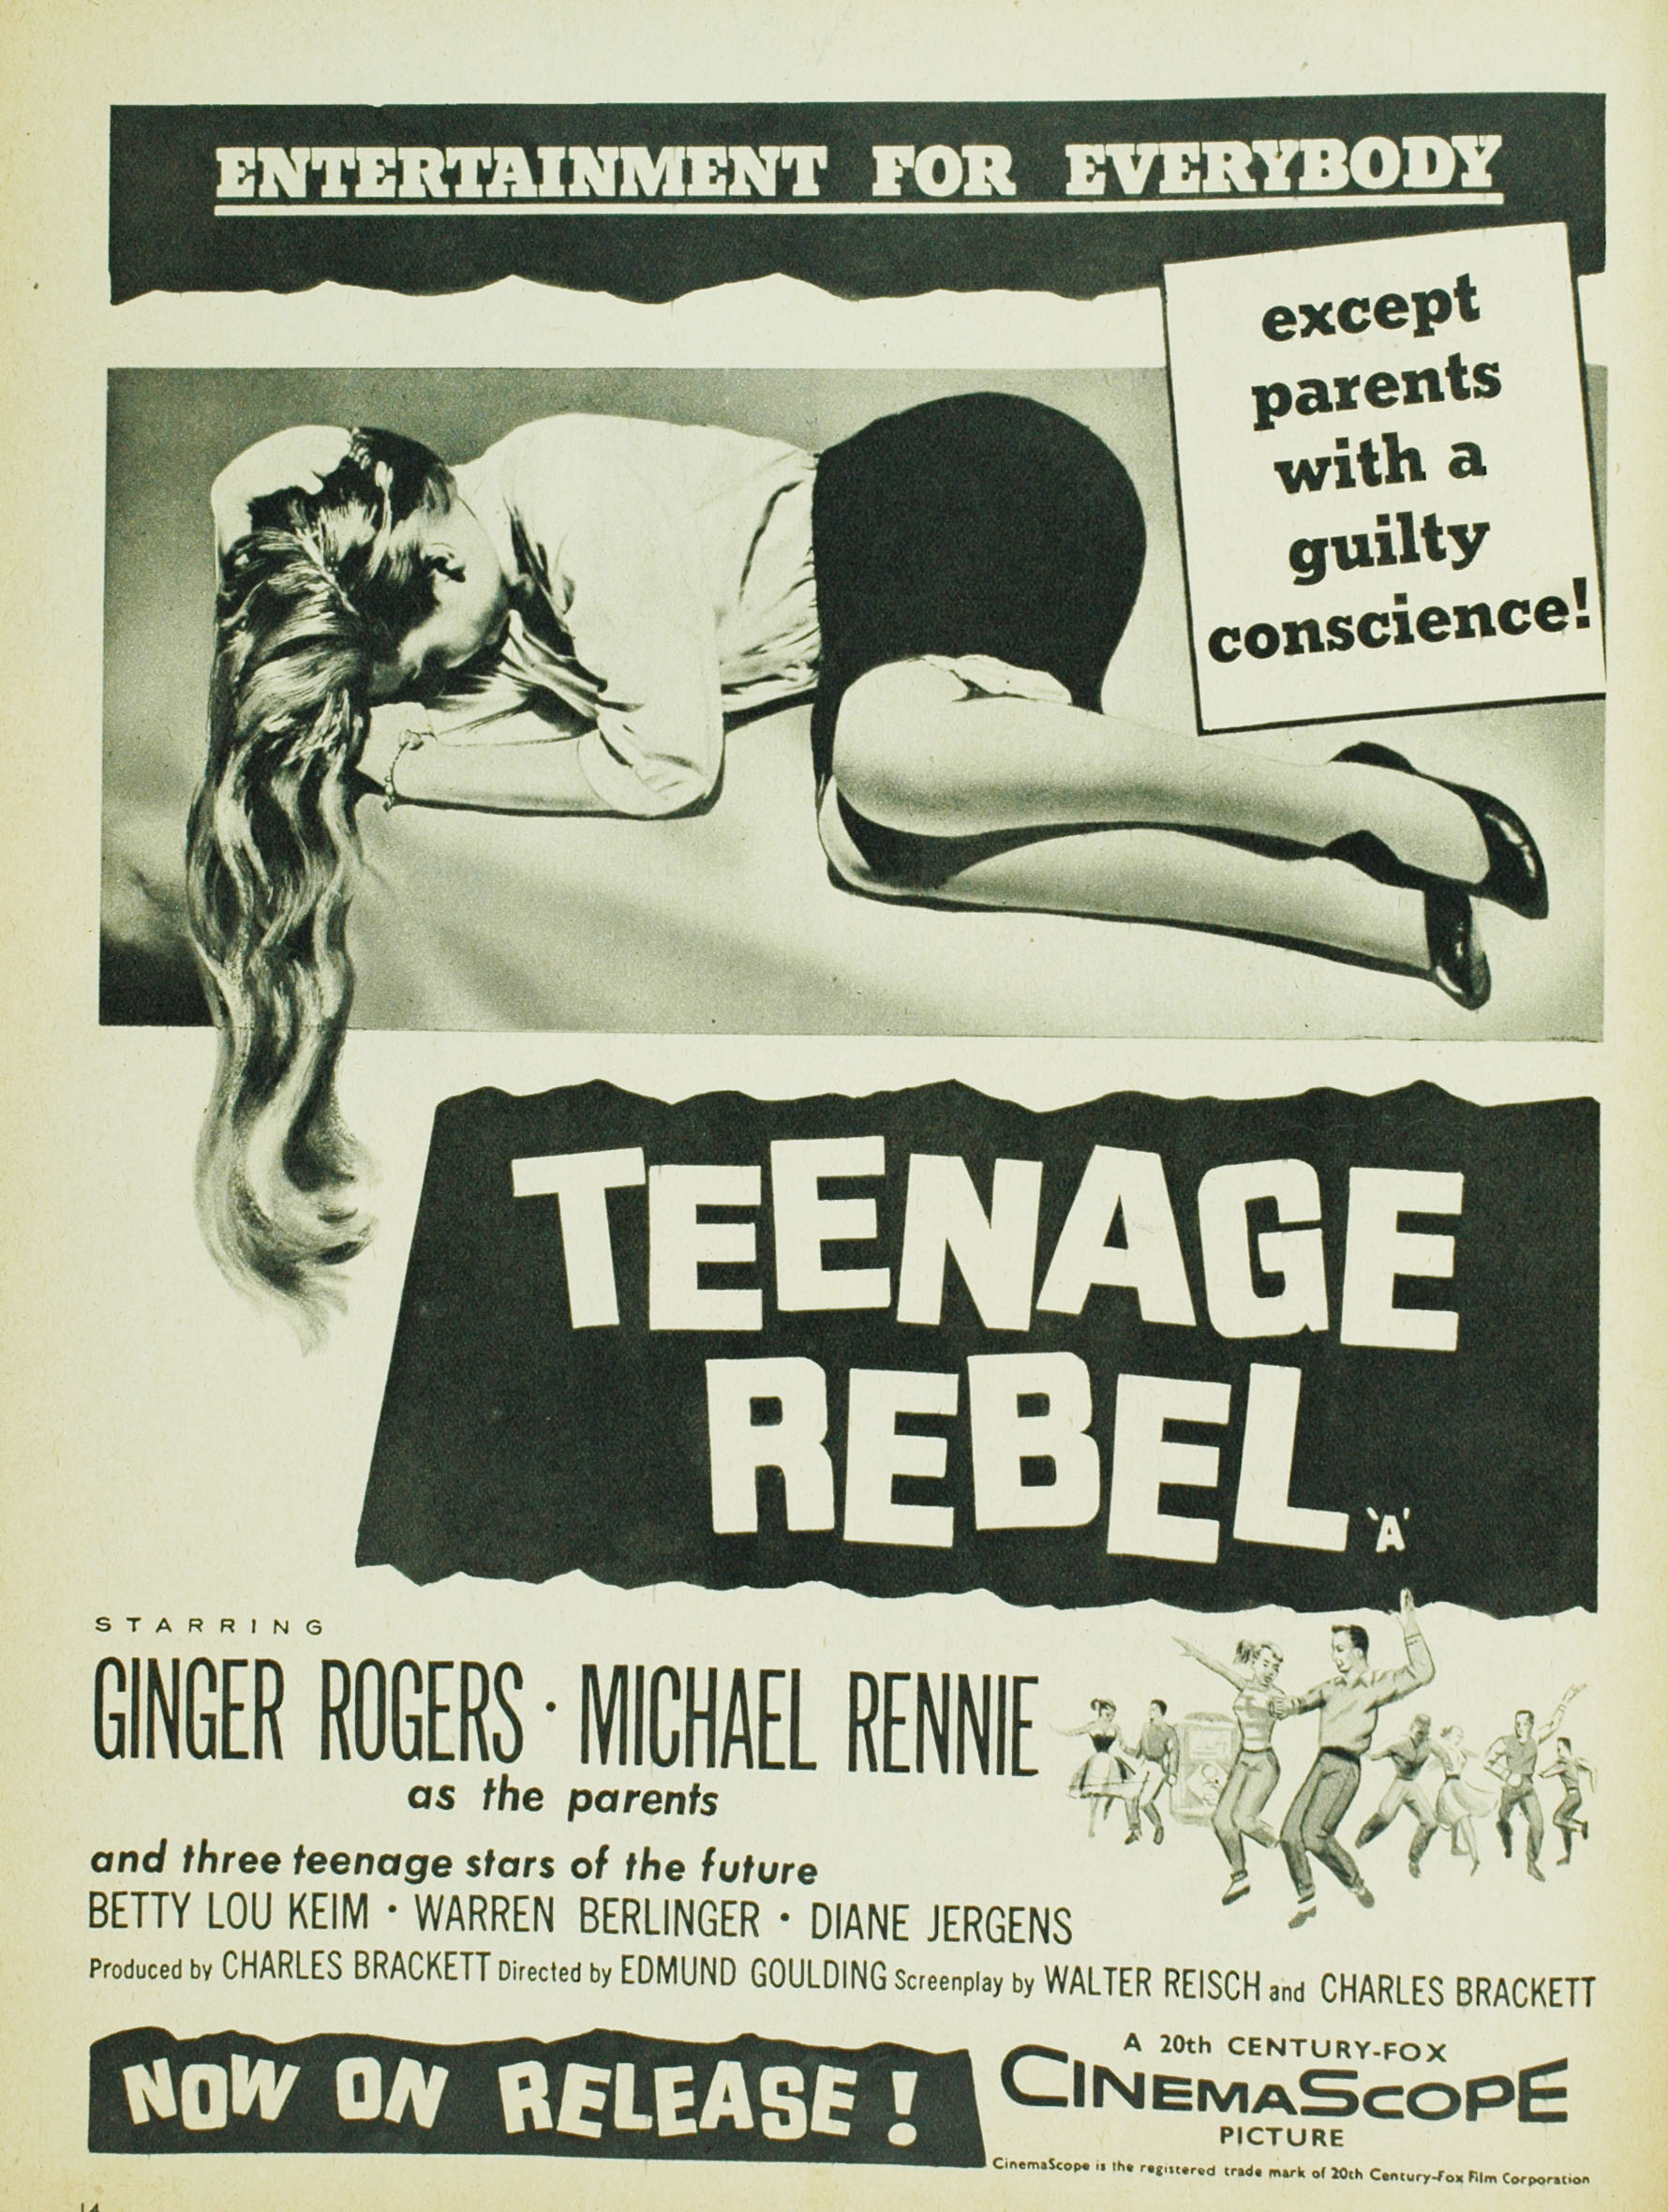 Teenage Rebel Film Poster, Photoplay Magazine March 1957